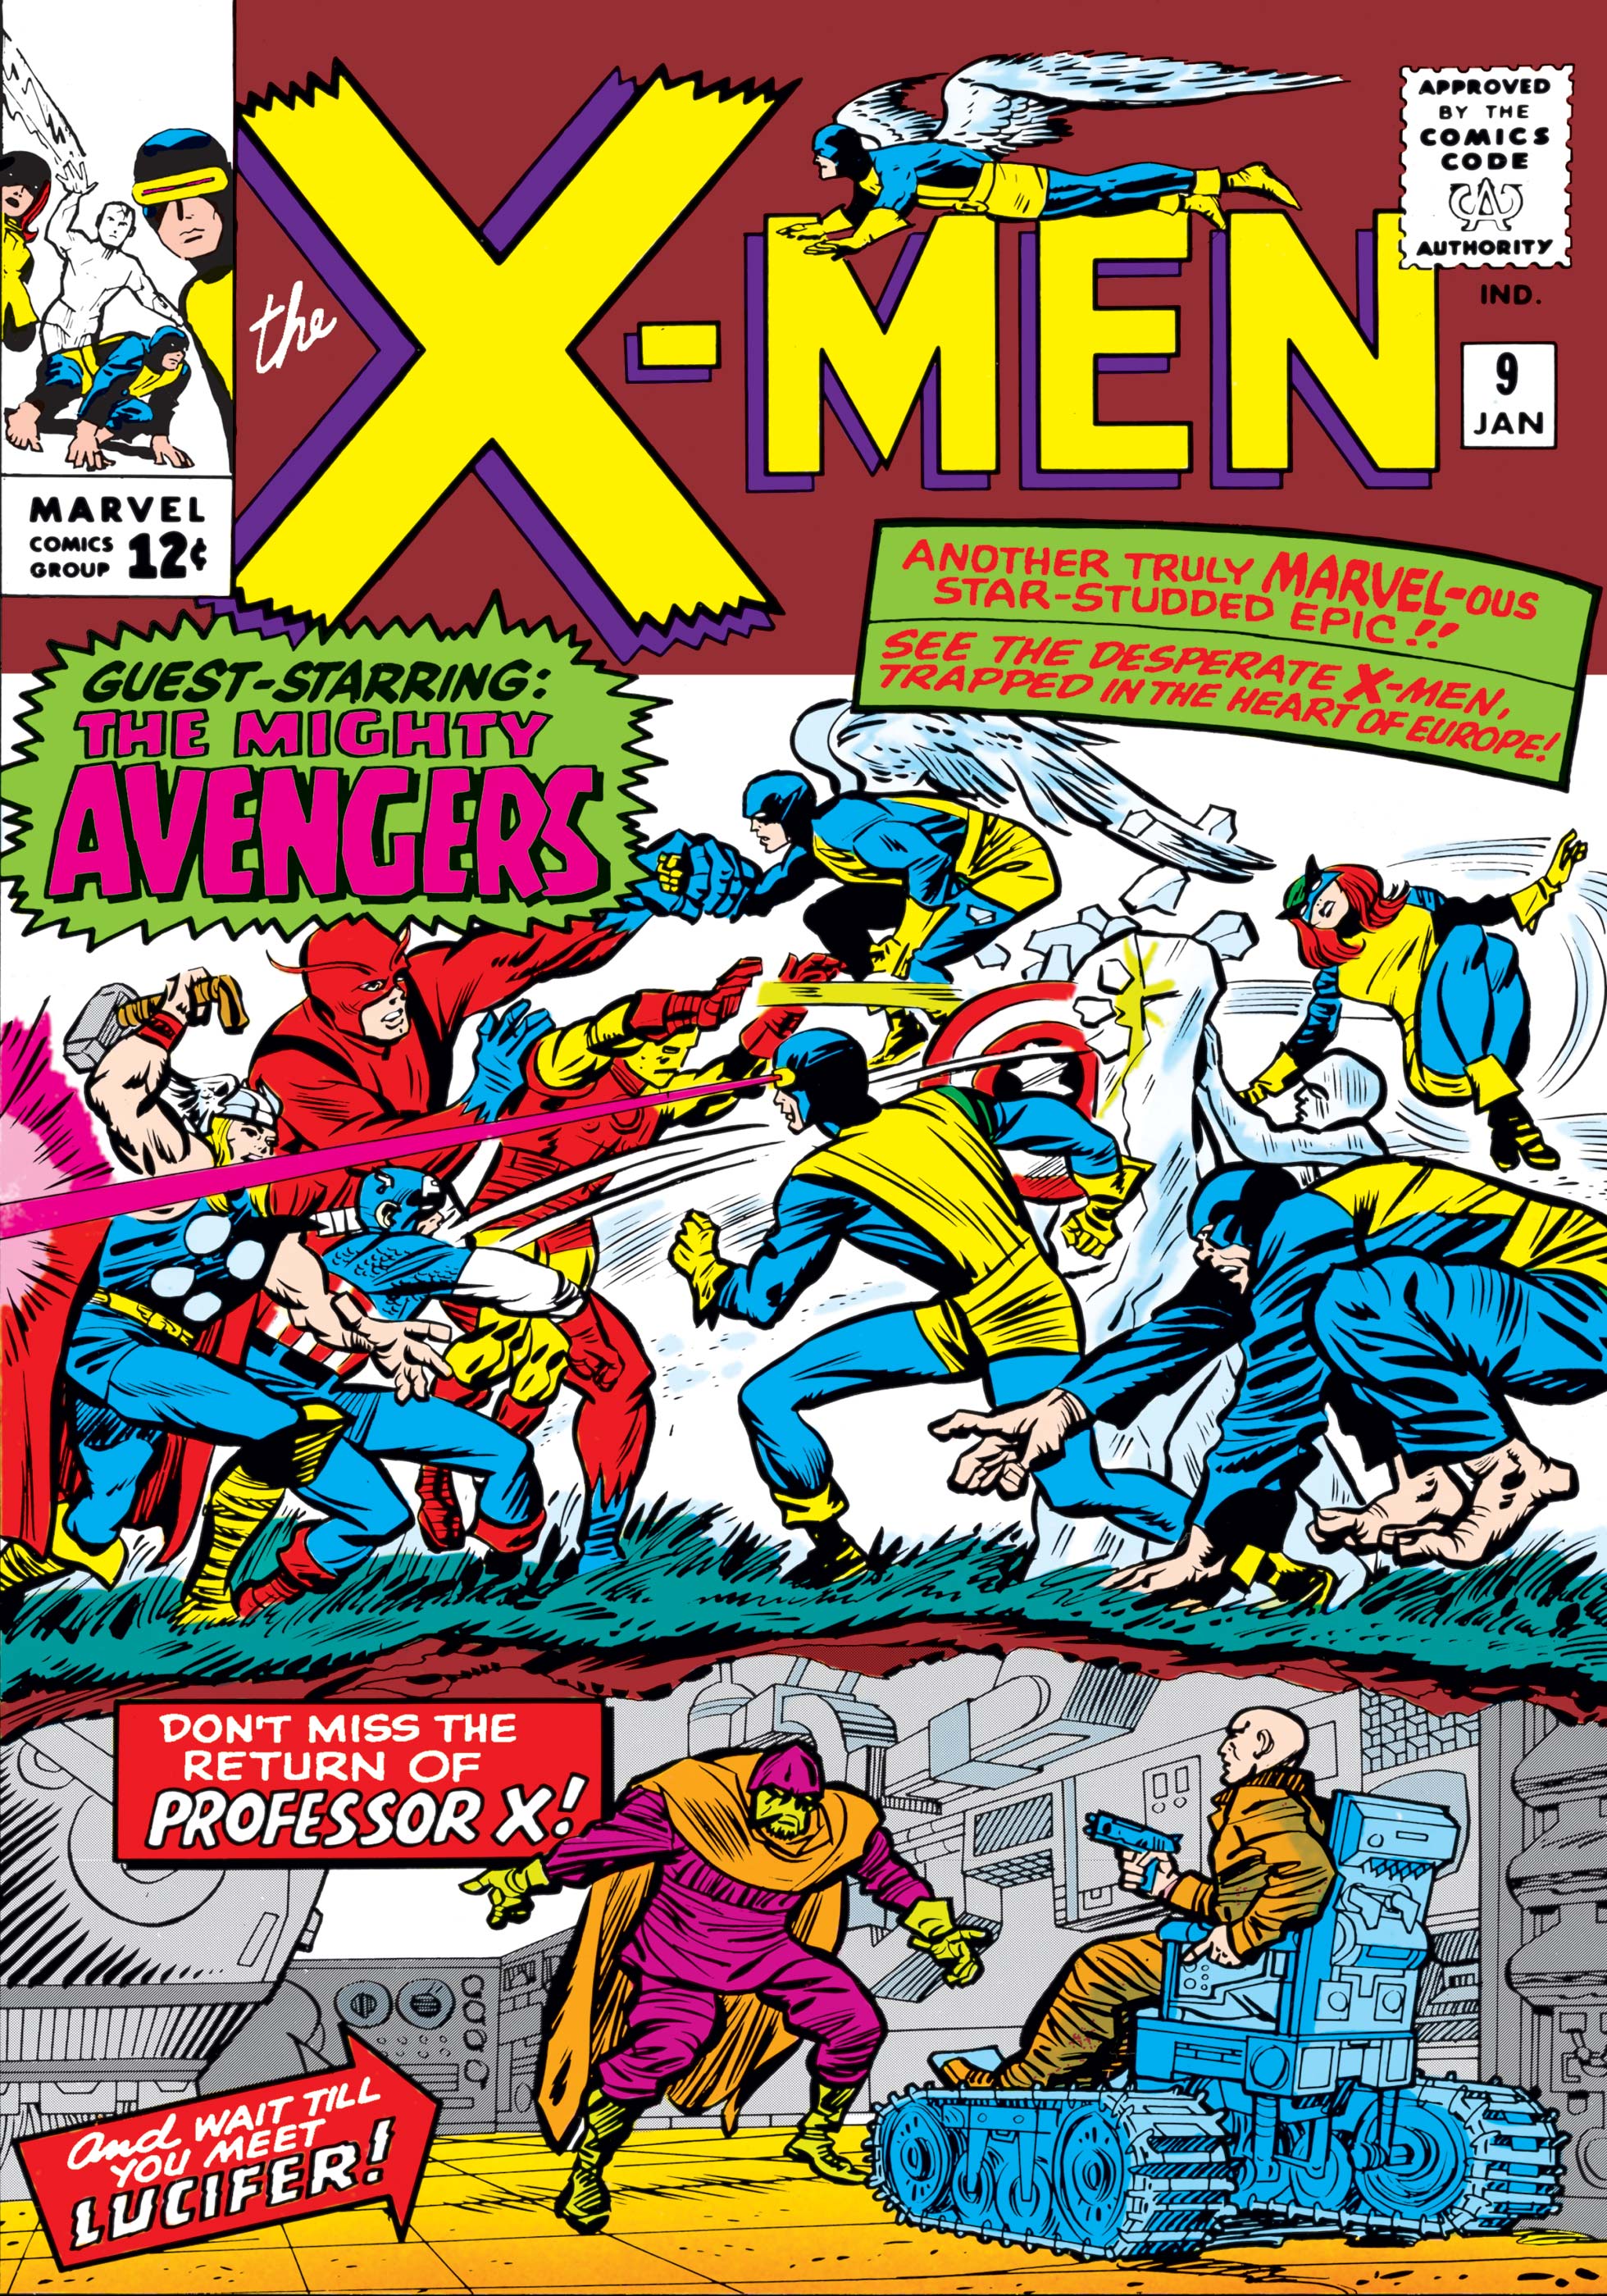 Uncanny X-Men (1963) #9